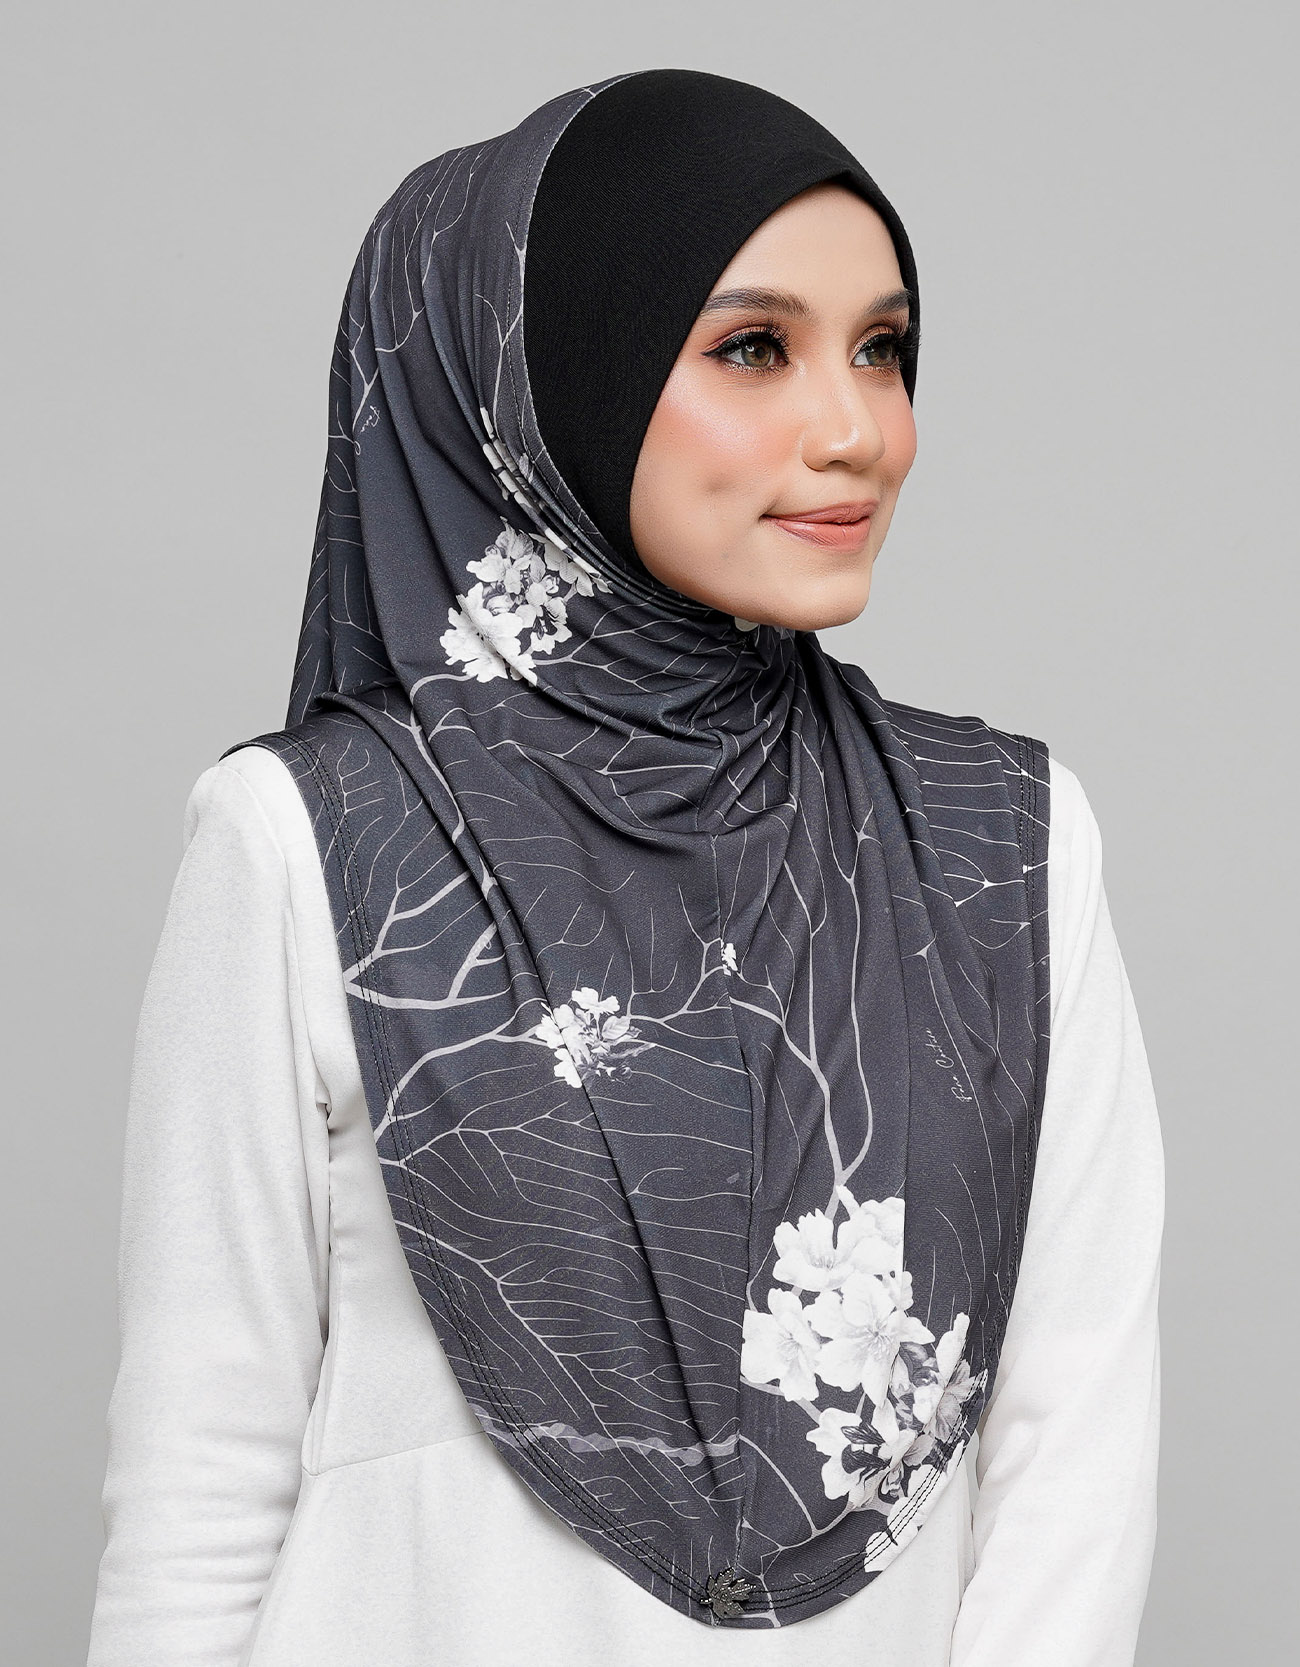 Express Hijab Damia Signature 03 - Black Edition